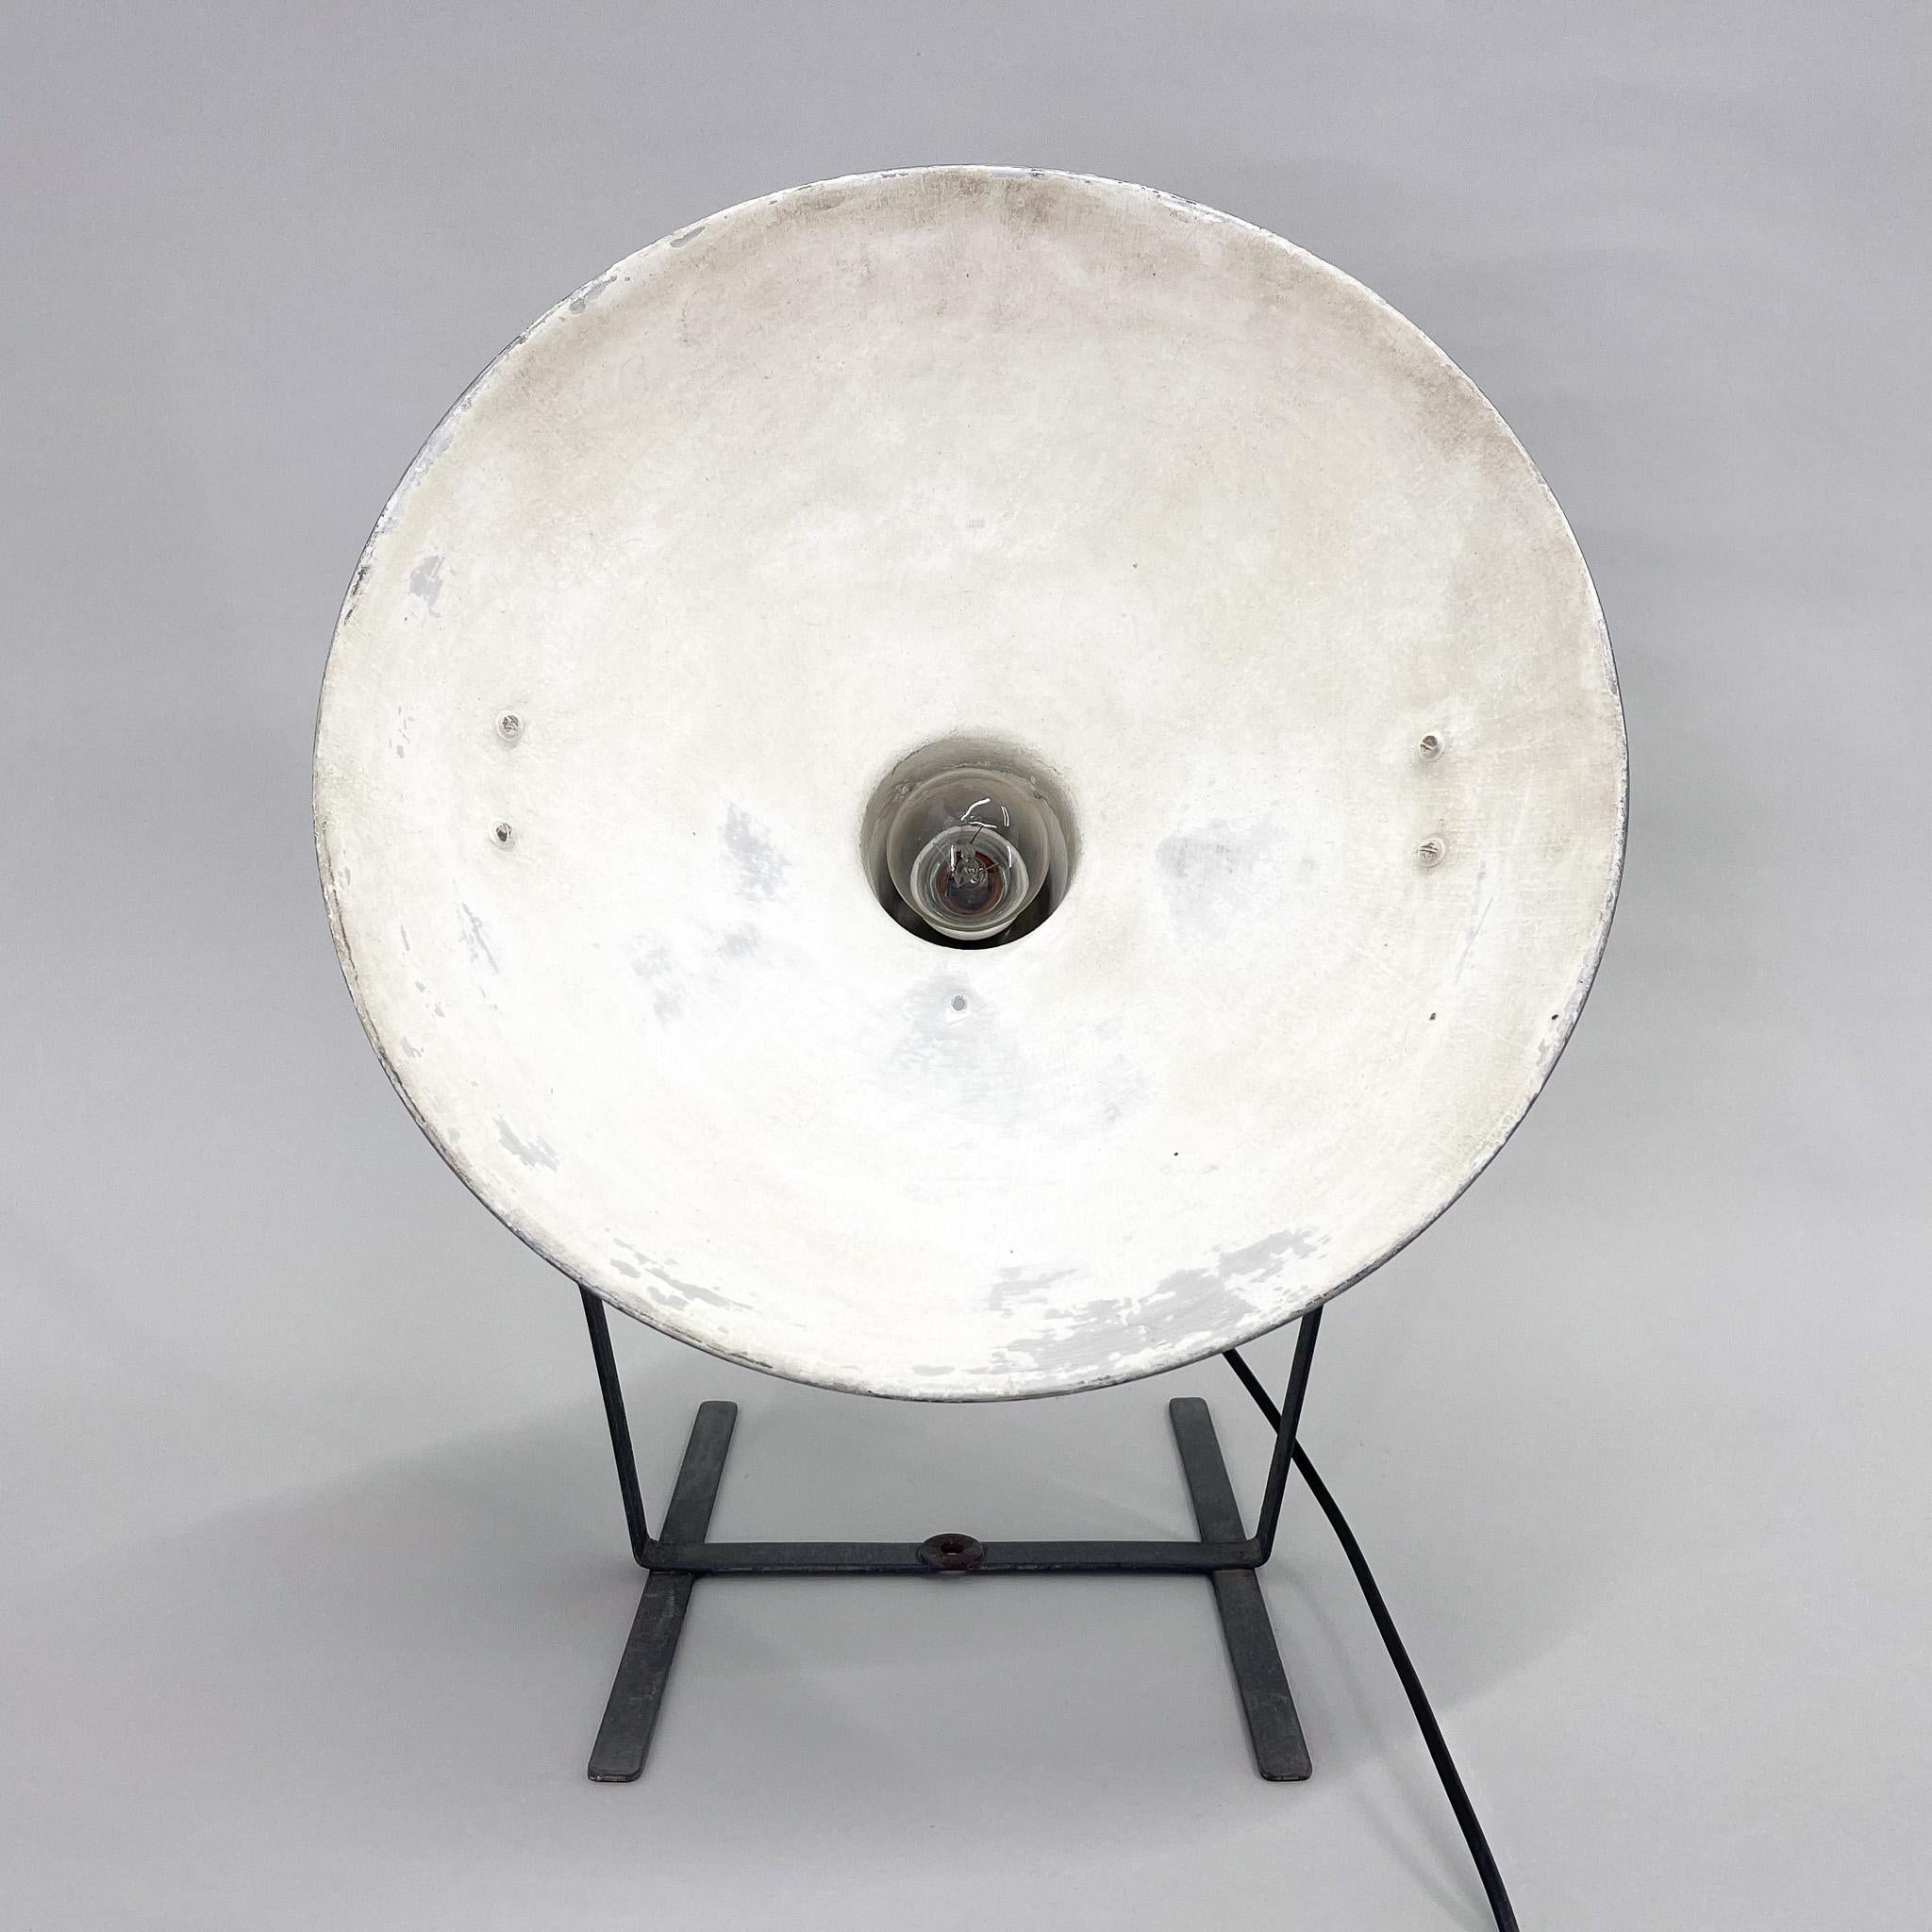 20th Century Italian Metal Table Lamp from Ing. S. Marcucci Srl. Coemar, 1950s-1960s